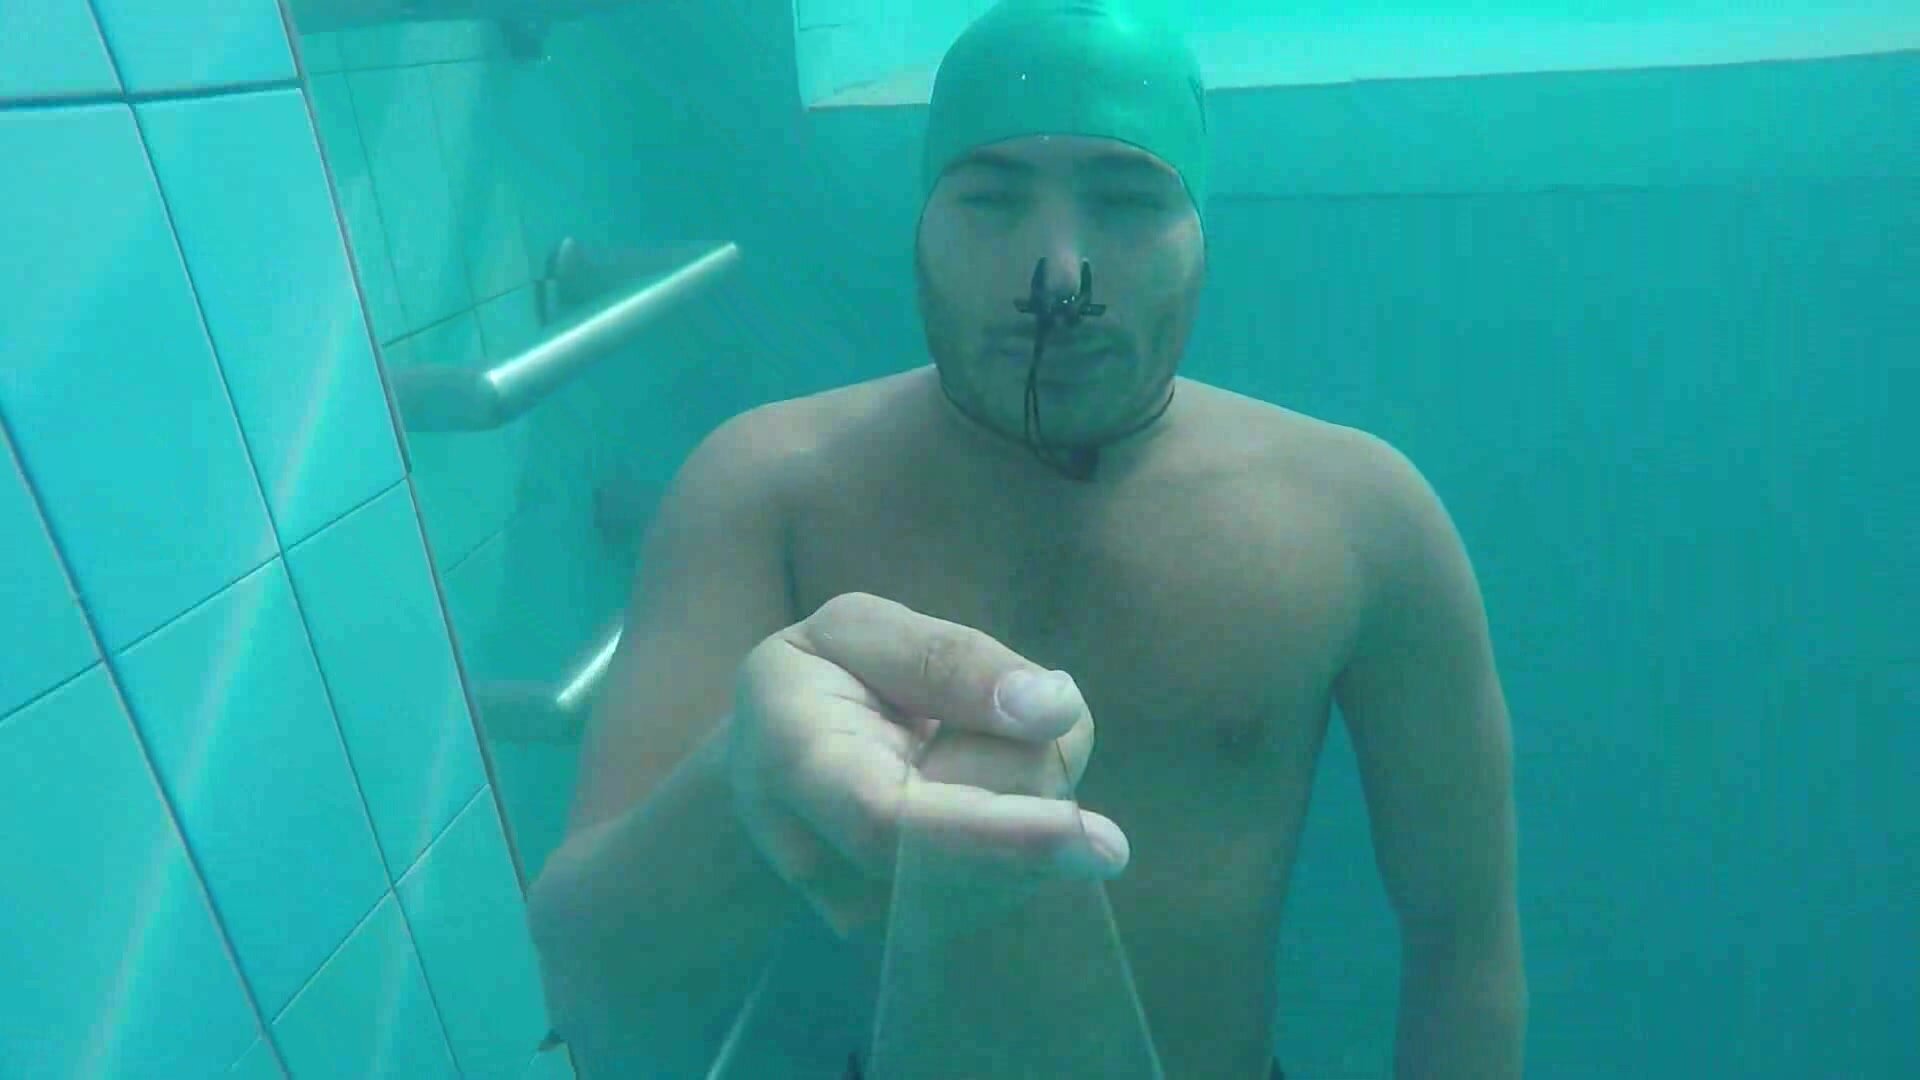 Kareem barefaced underwater with swimcap & noseclip